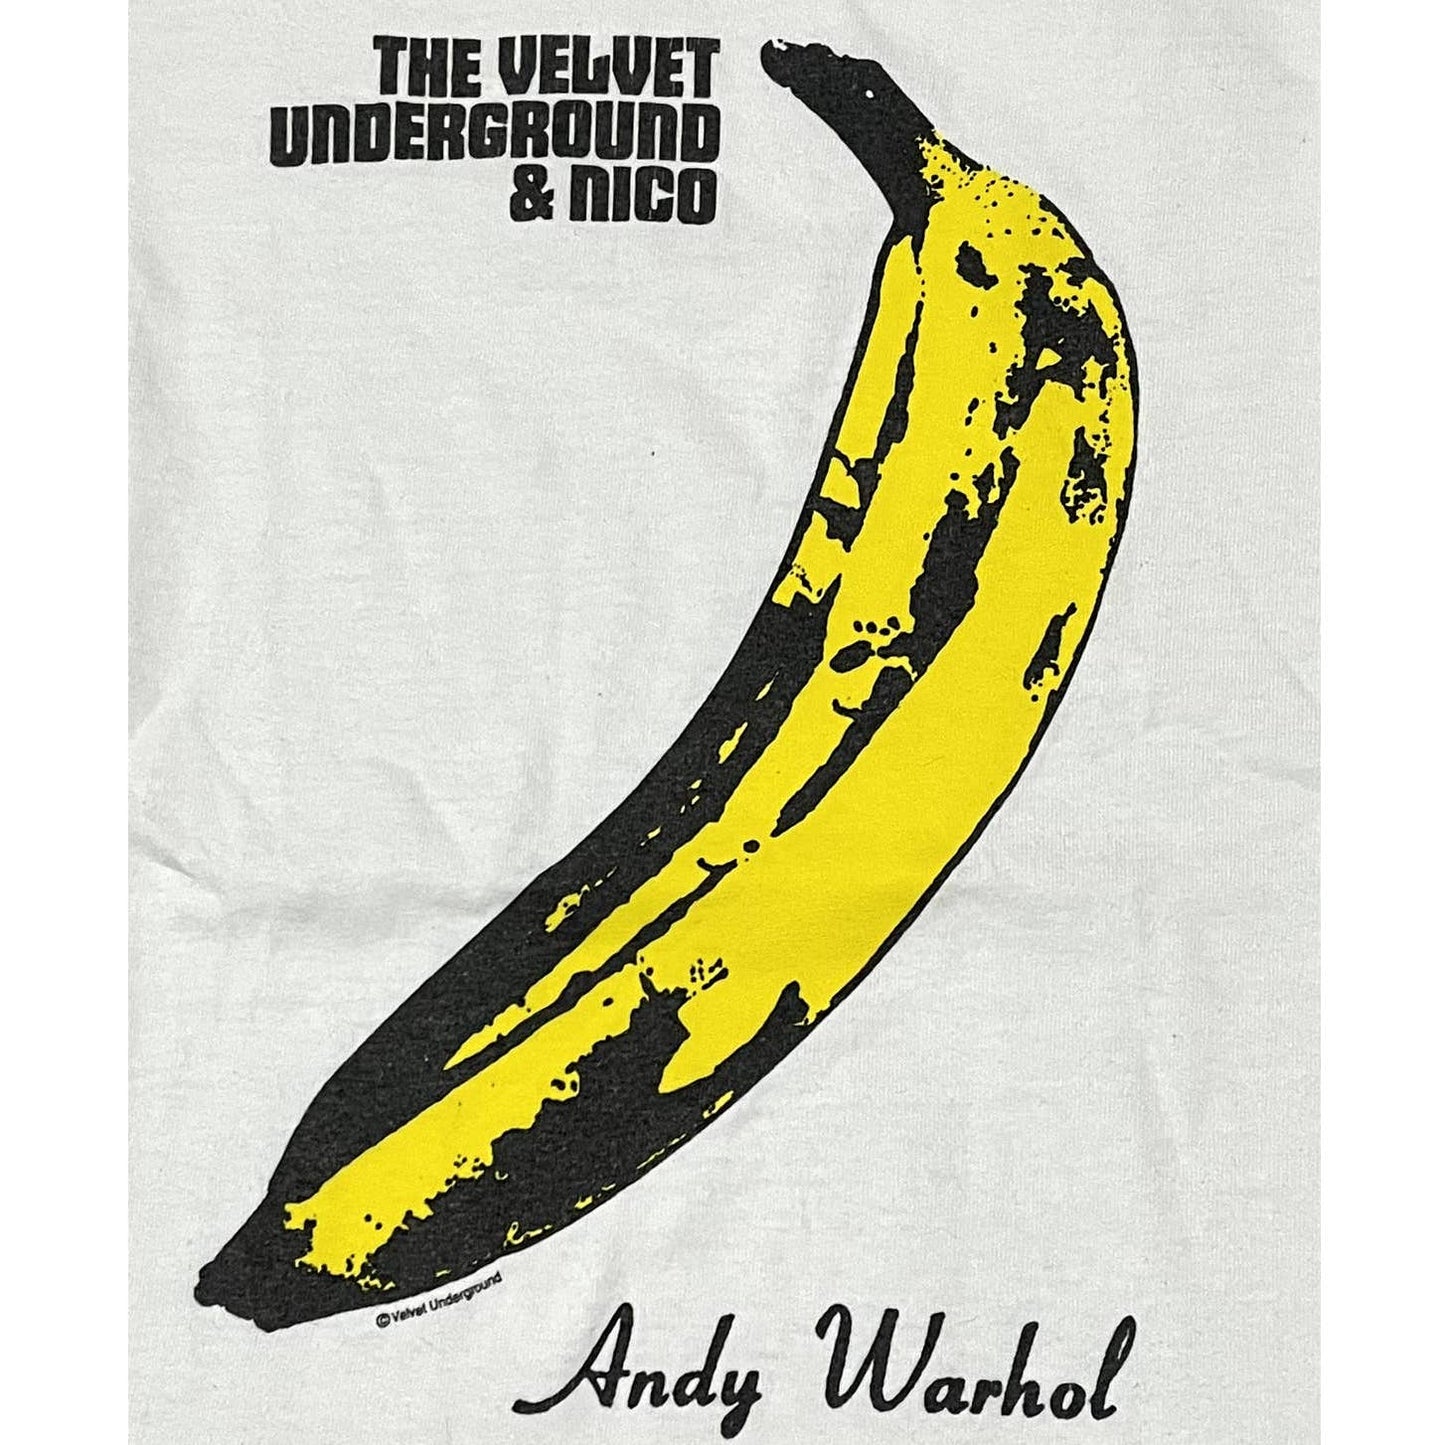 Vintage Velvet Underground & Nico Ringer Tee